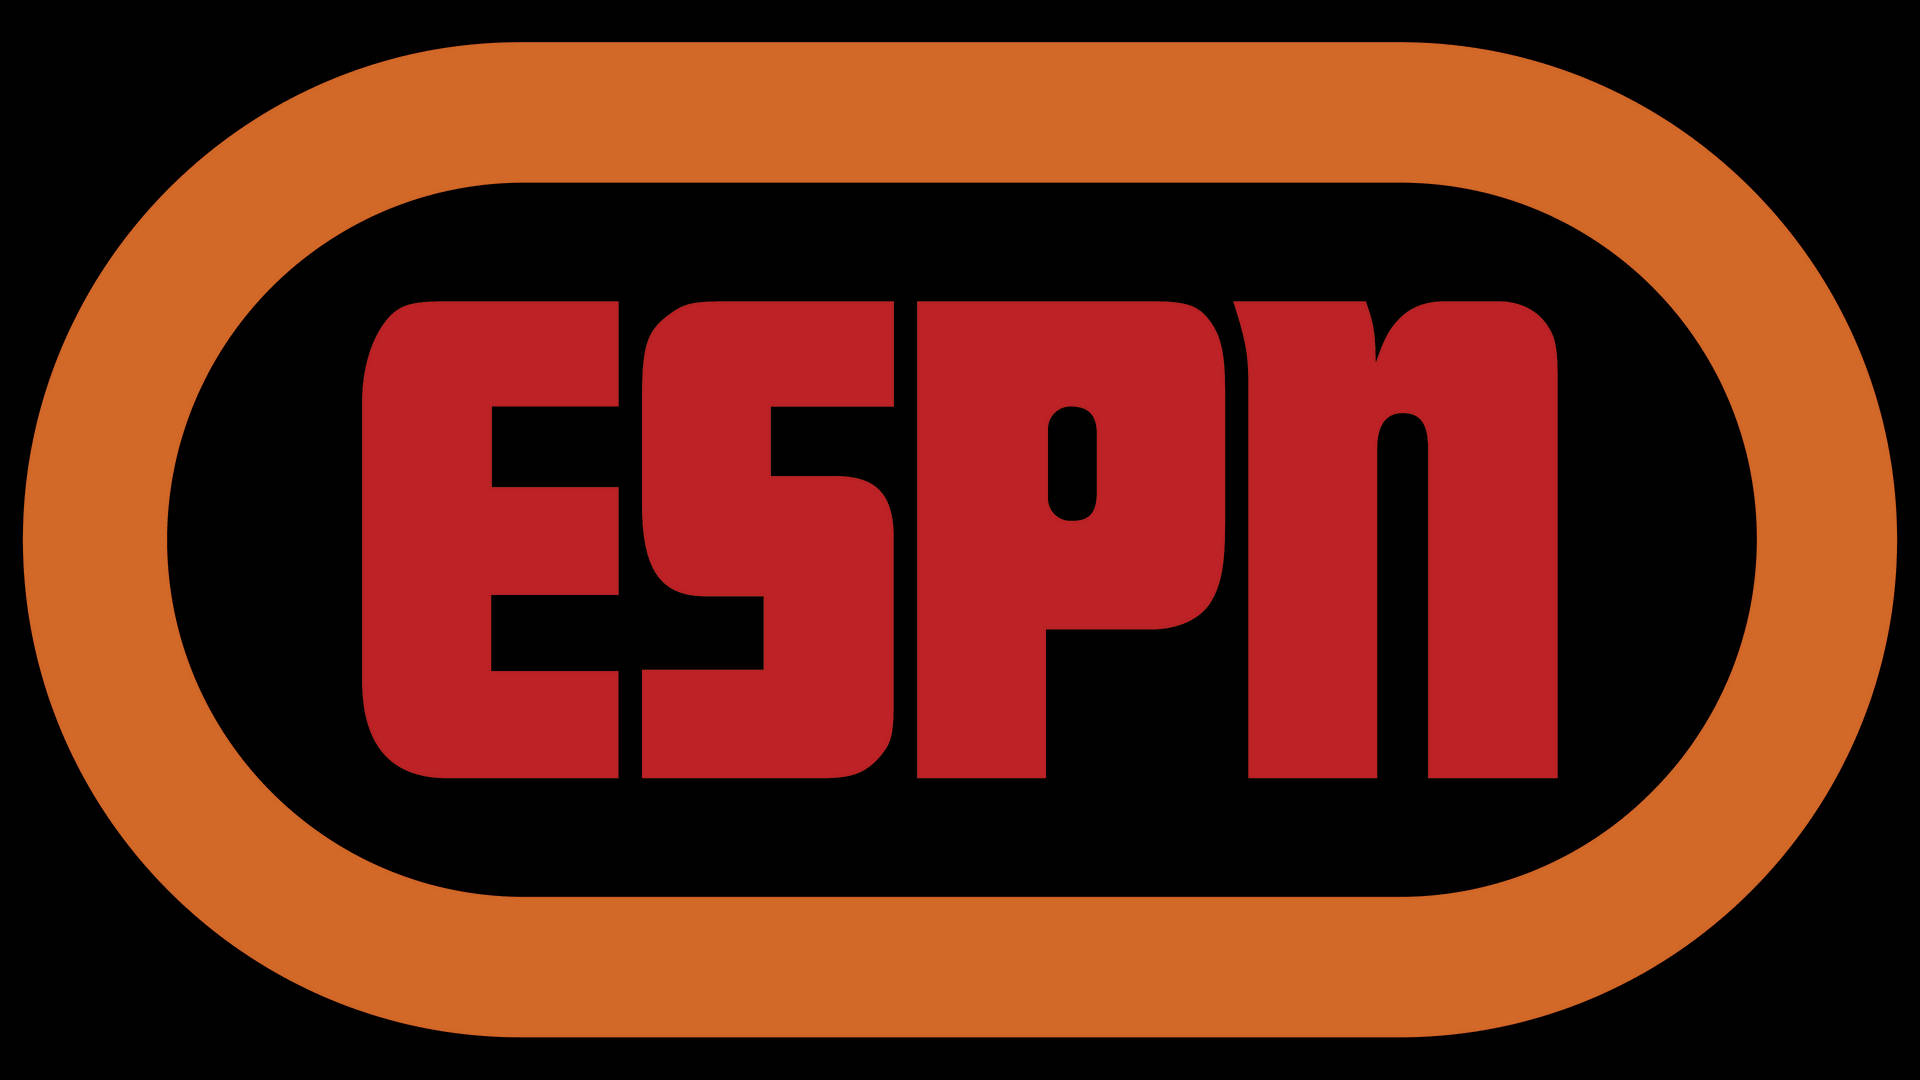 Captivating Terracotta Espn Logo Background